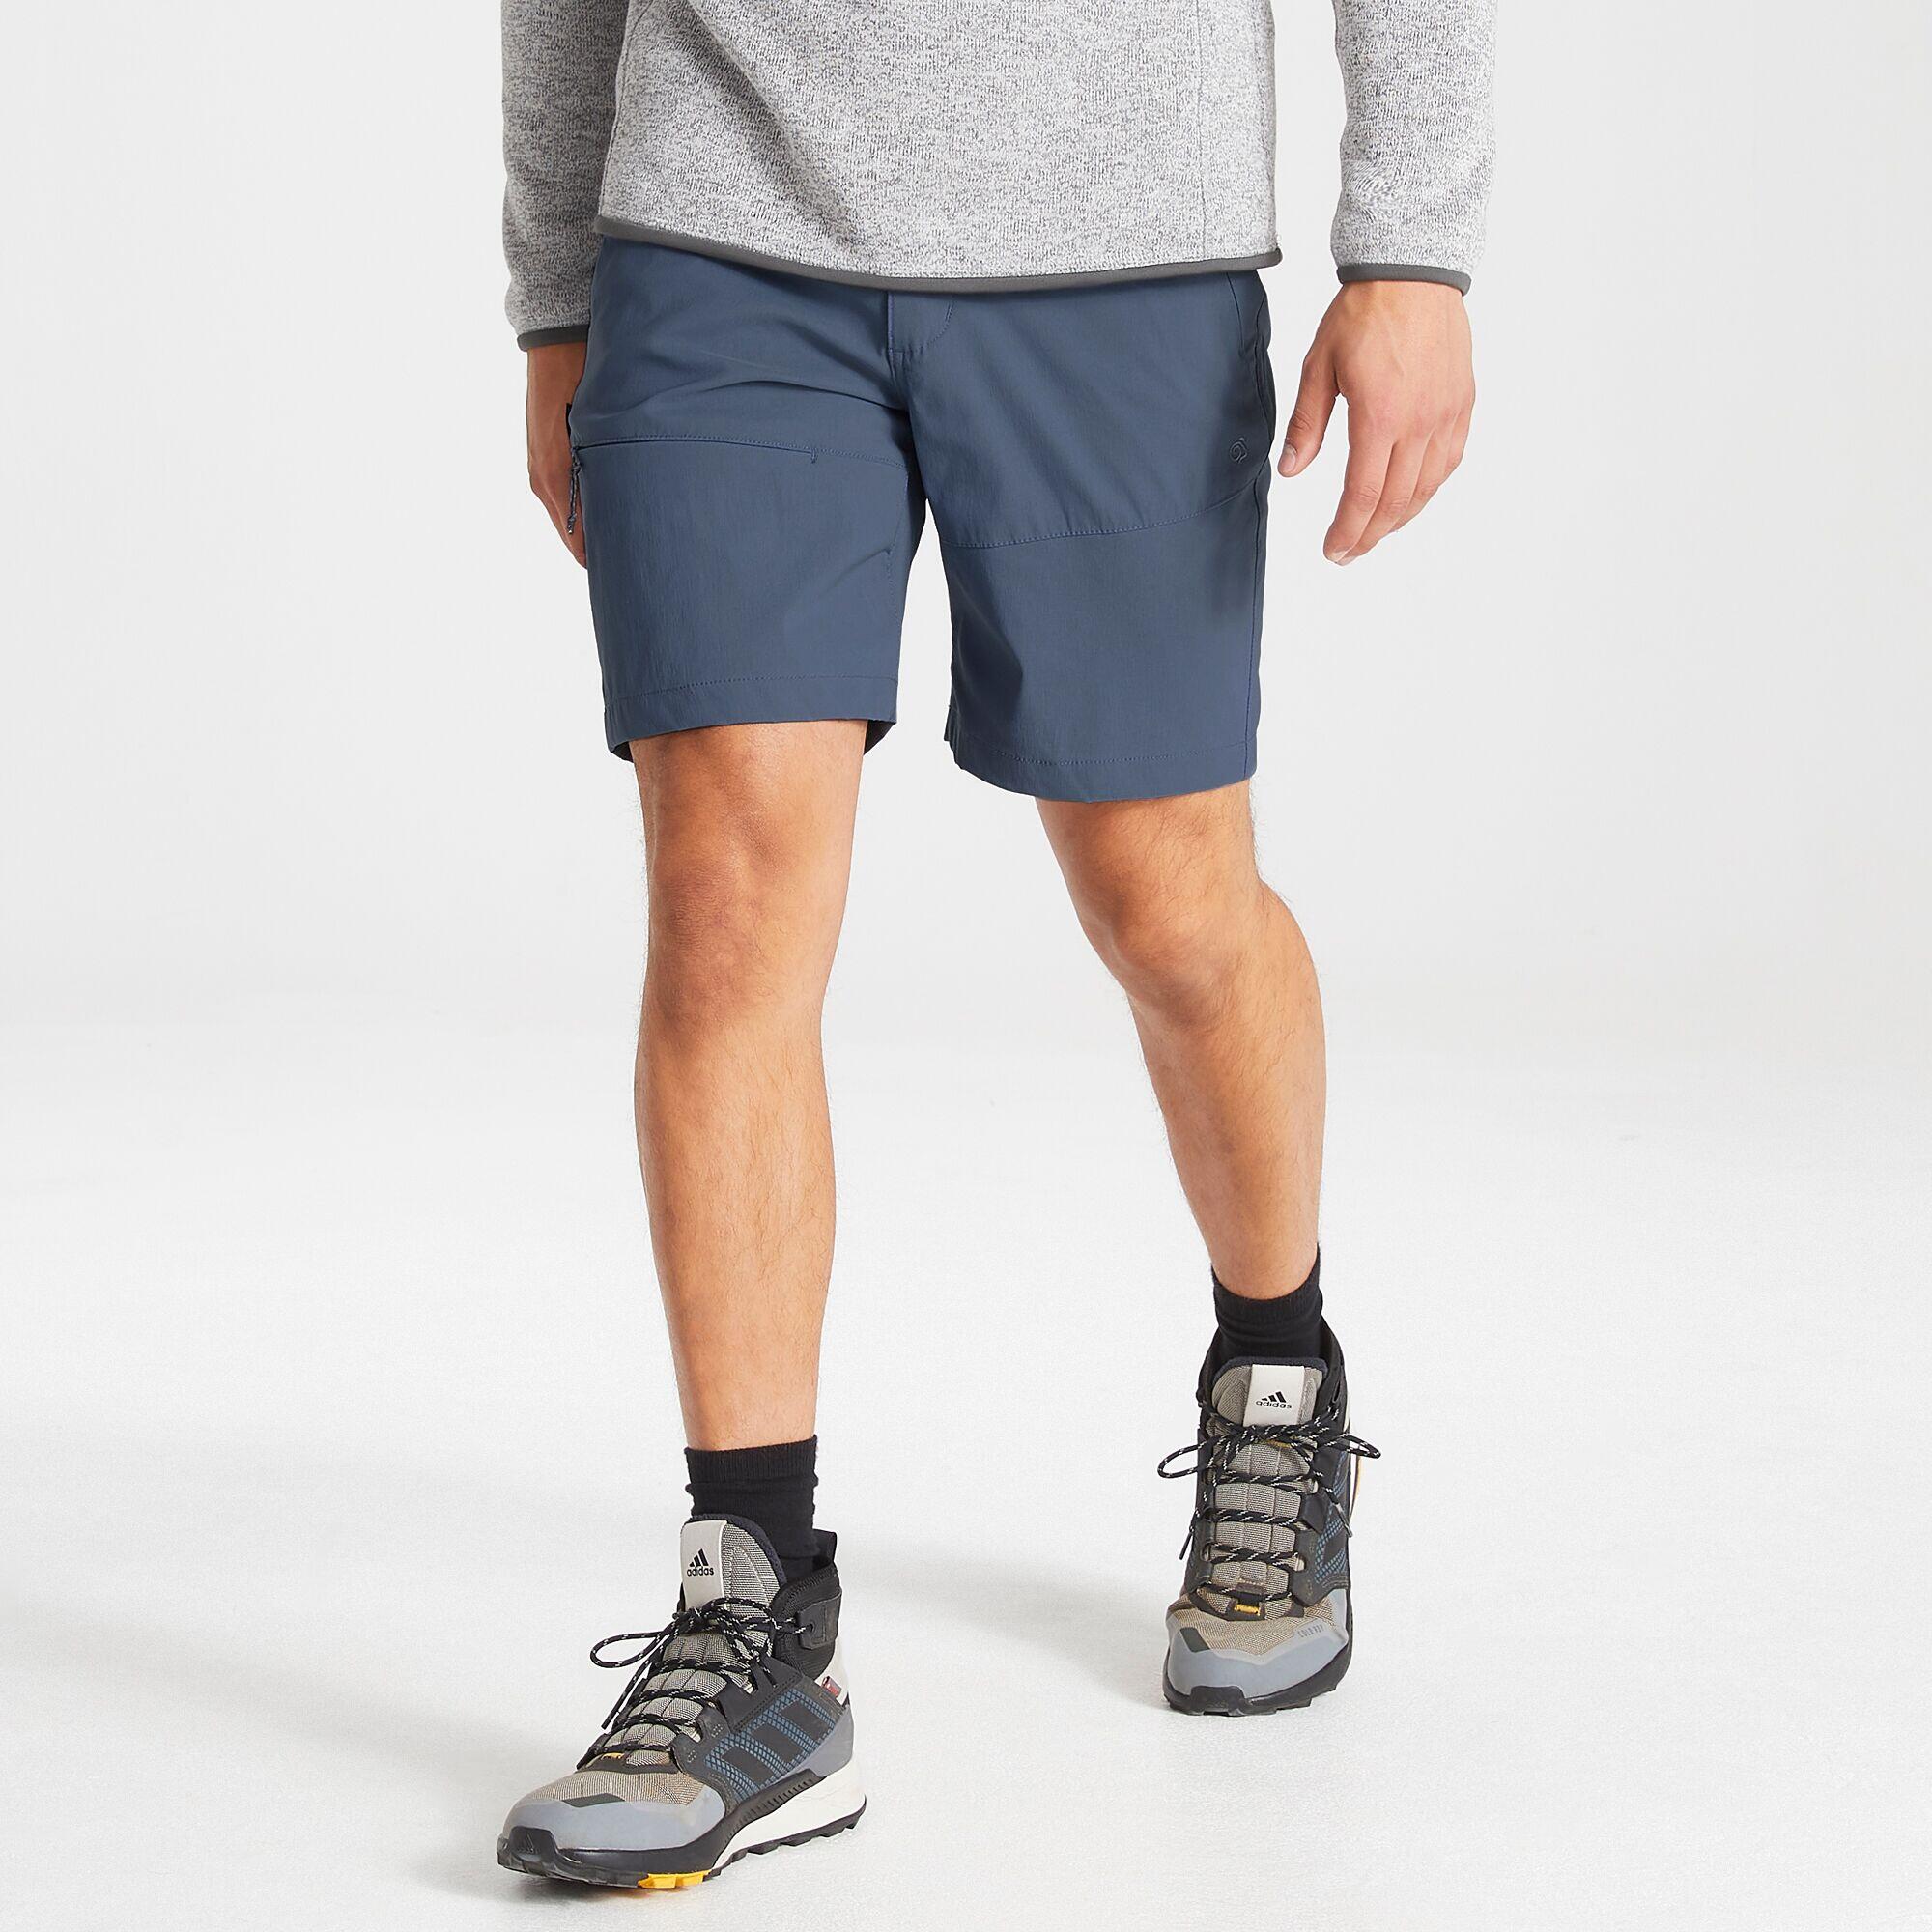 CRAGHOPPERS Men's Kiwi Pro Shorts